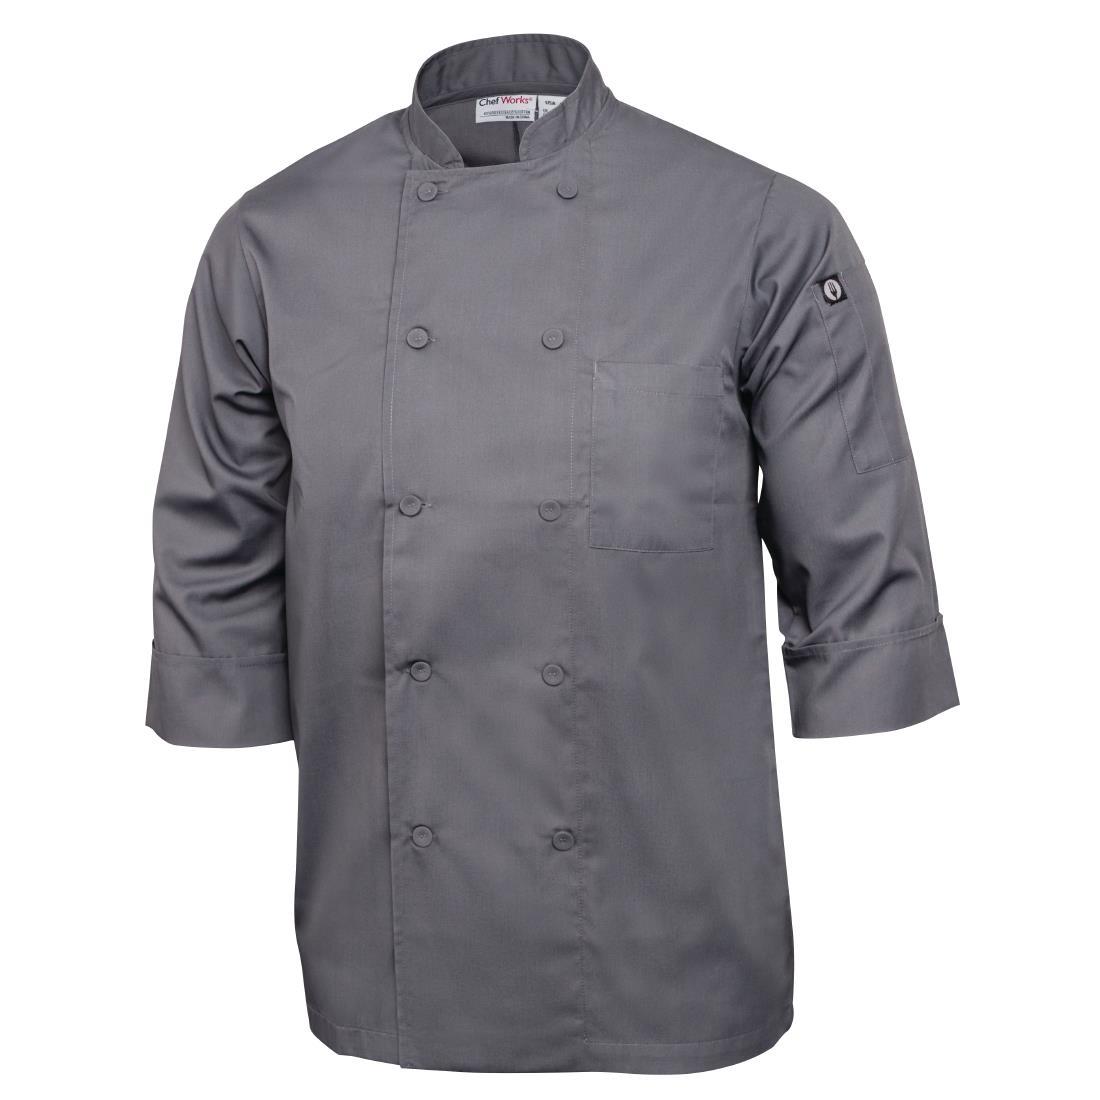 Chef Works Unisex Chefs Jacket Grey M - A934-M  - 2